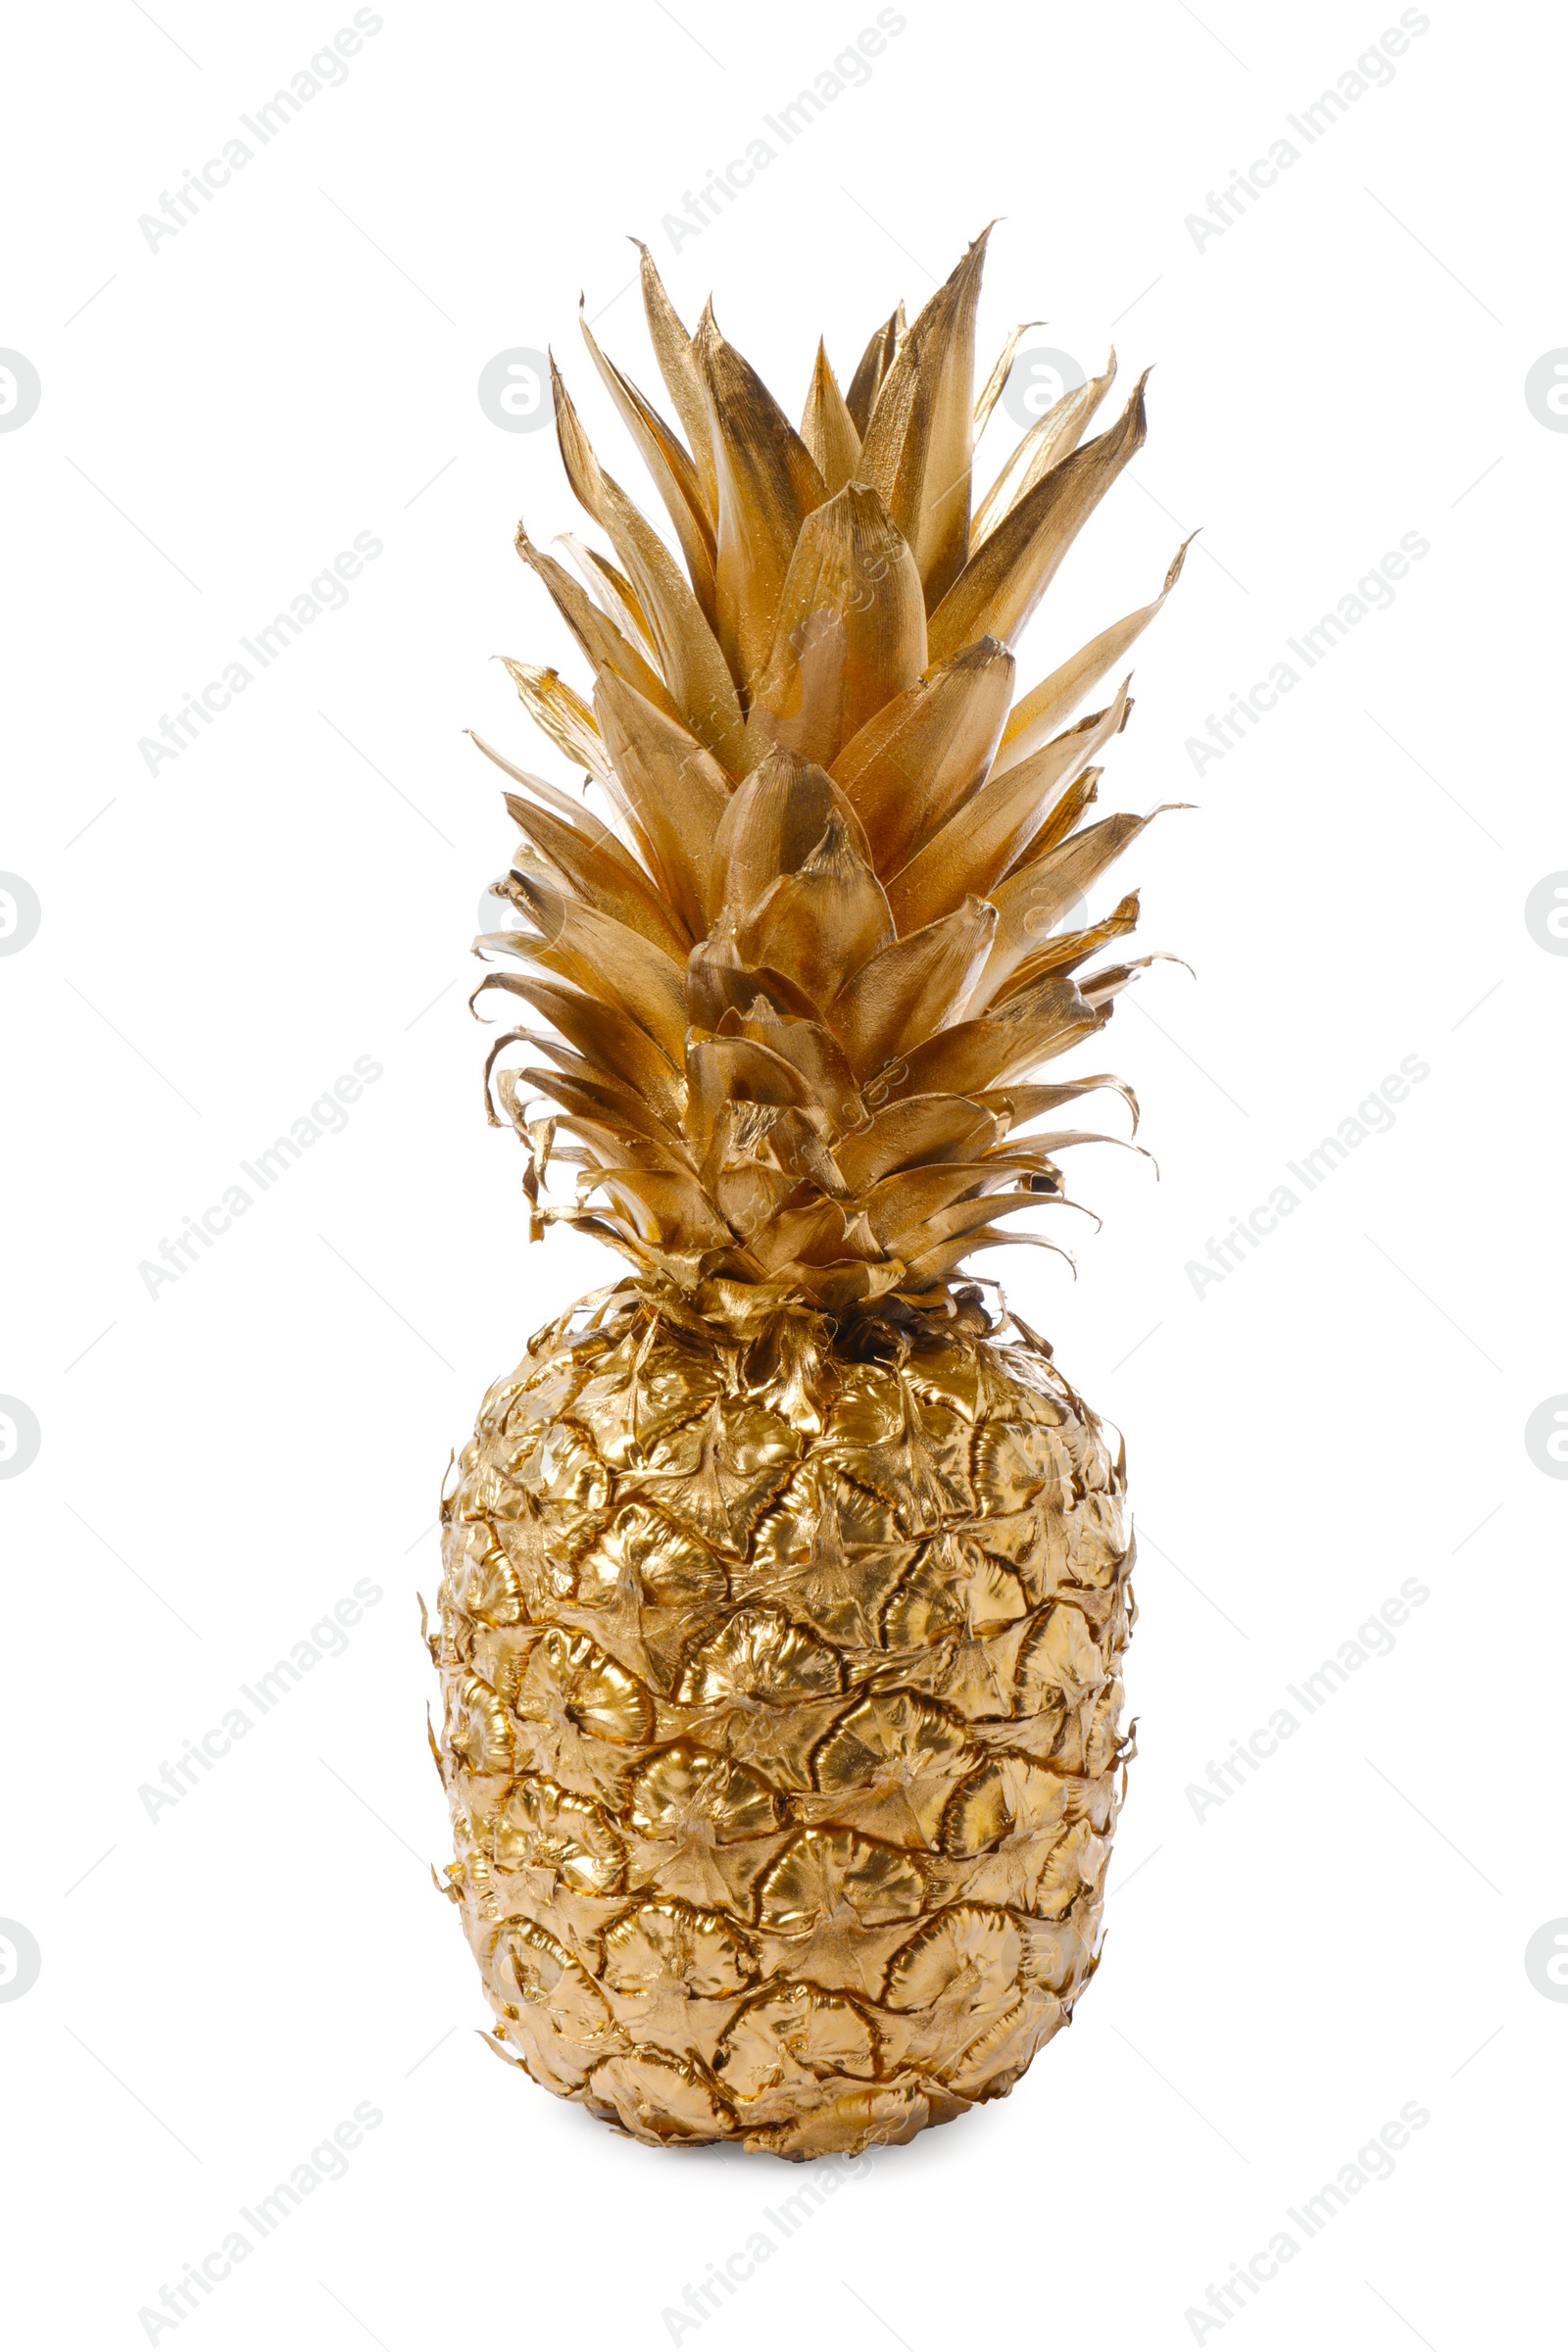 Photo of Shiny golden pineapple on white background. Decor element